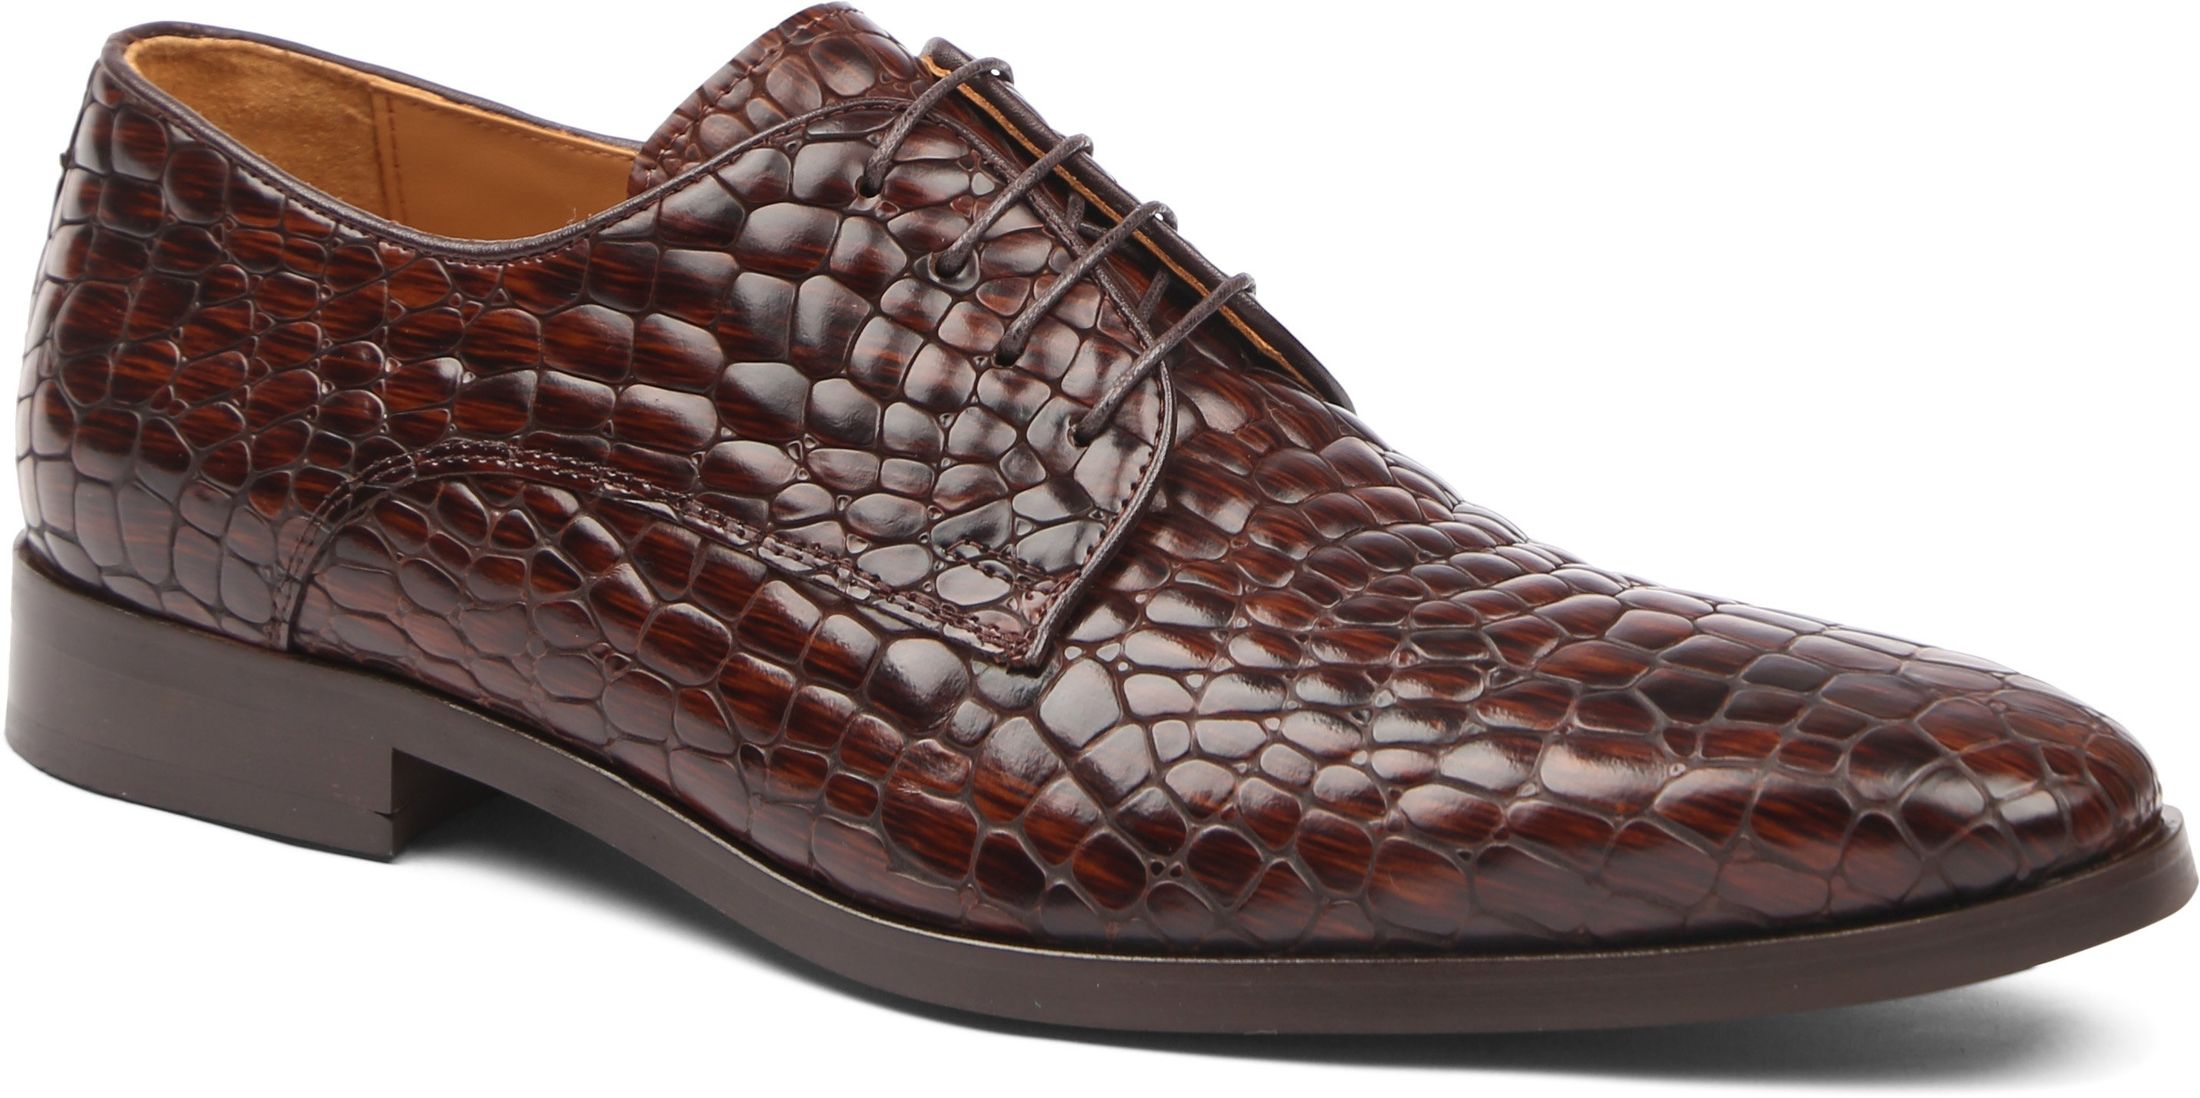 Melik Shoe Gevenes Brown size 9 product